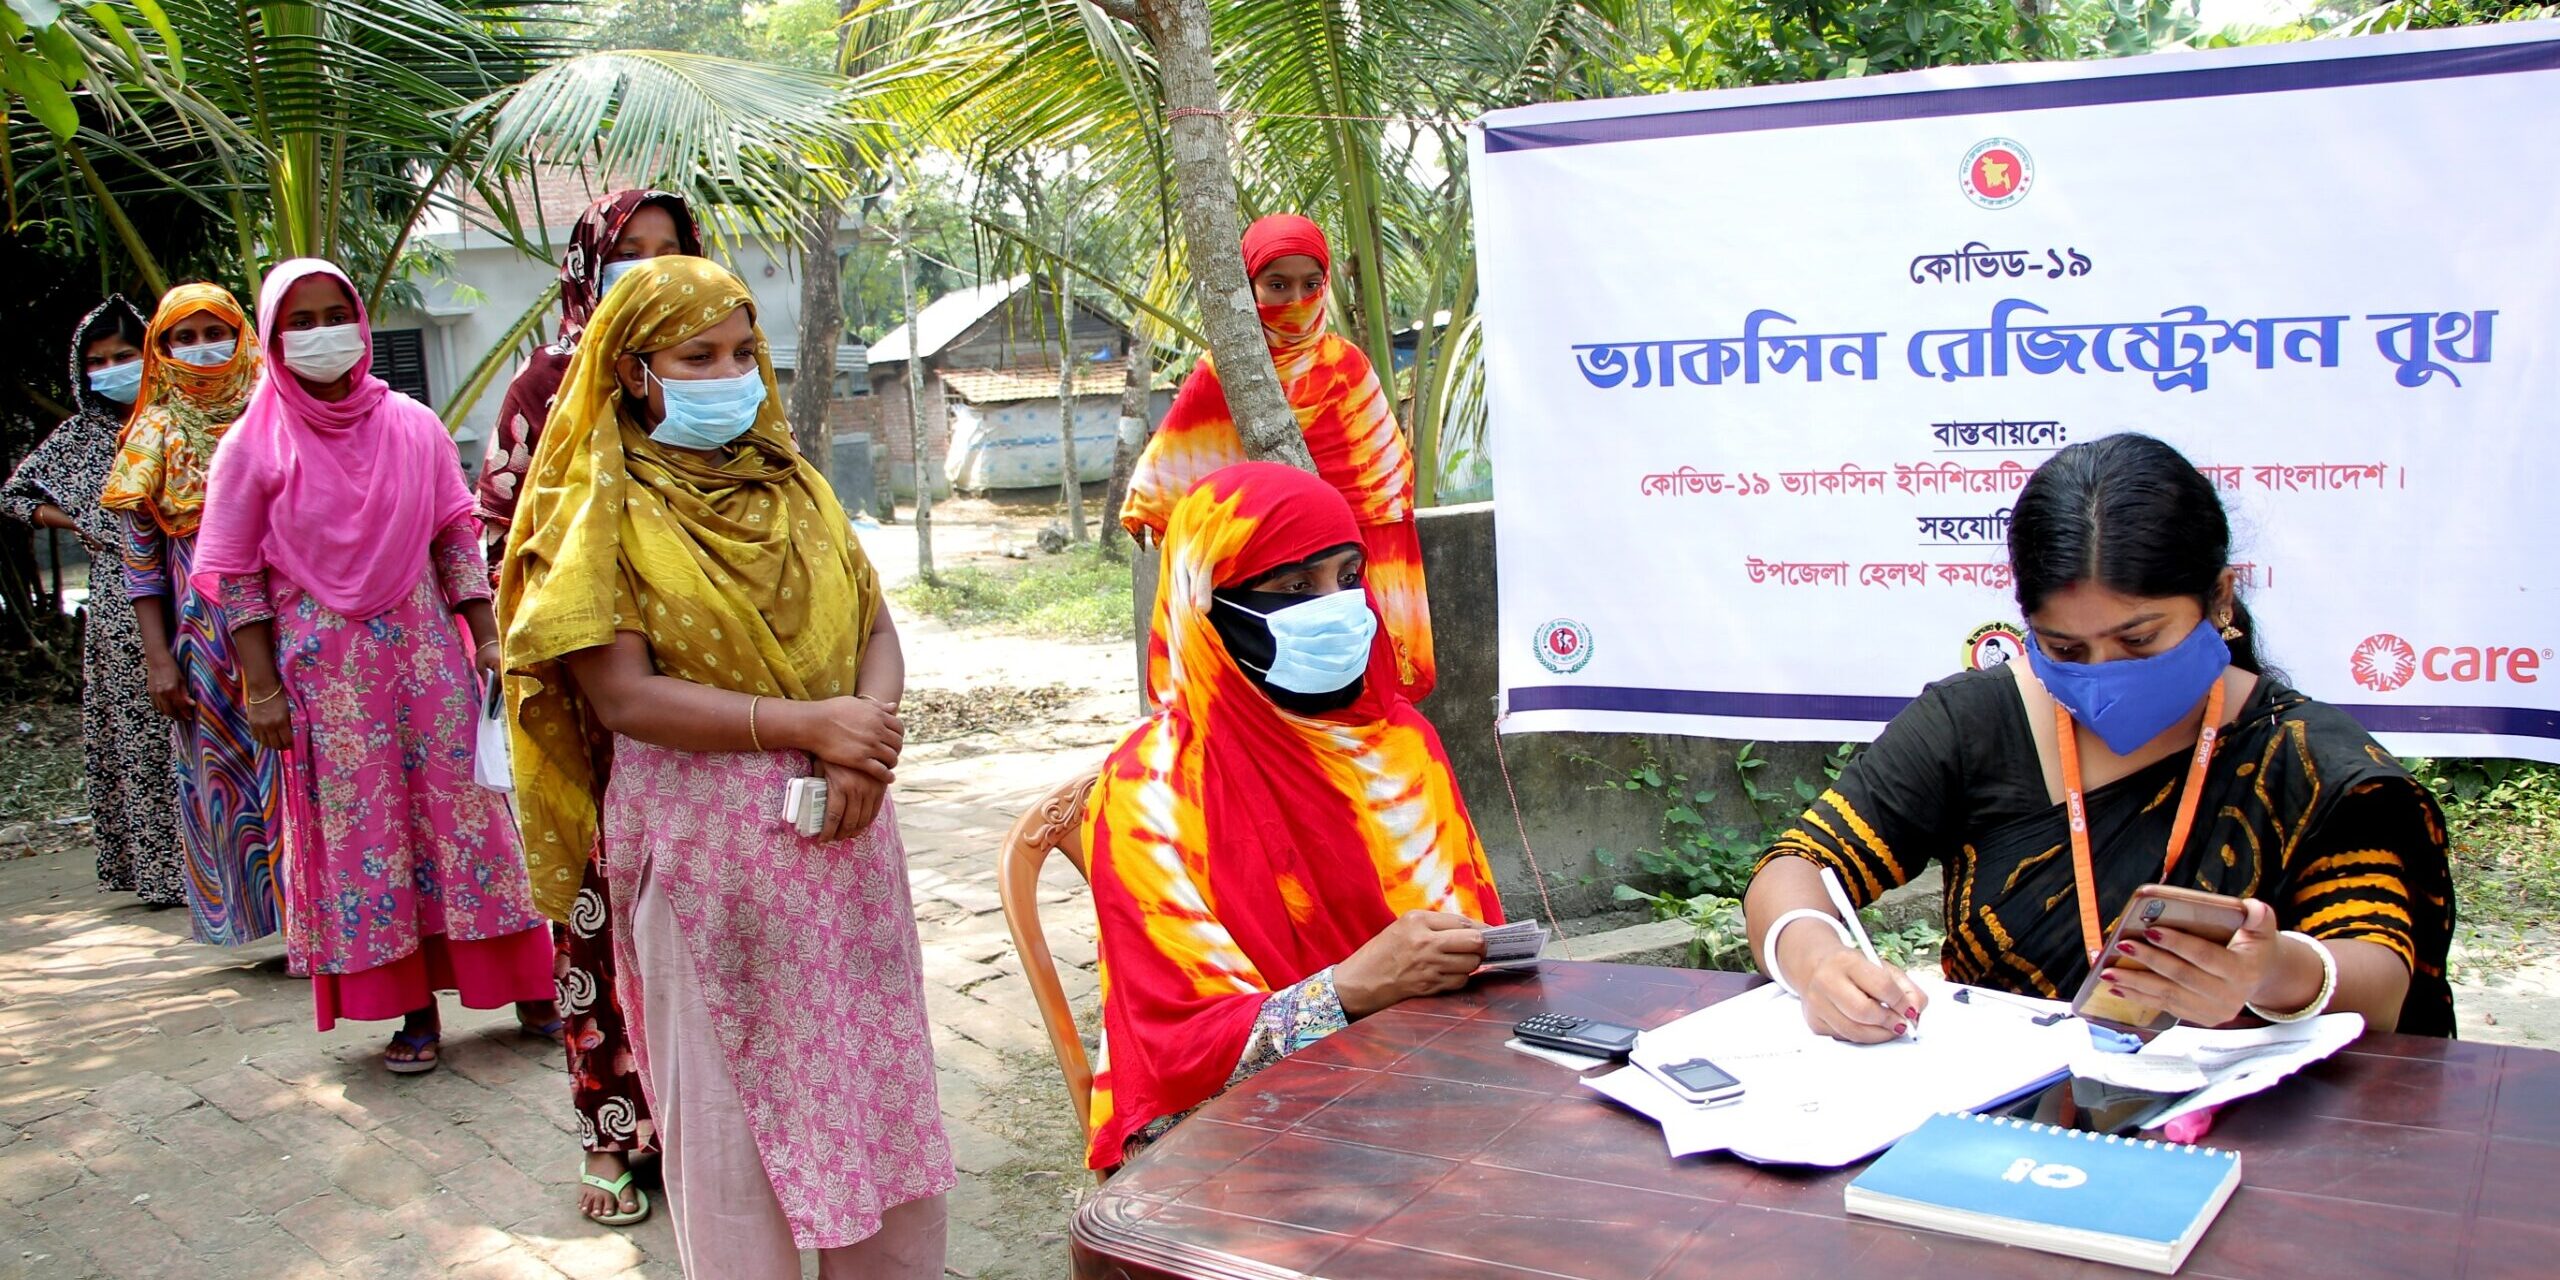 Une campagne de vaccination contre la COVID-19 au Bangladesh. Asafuzzaman Captain/CARE Bangladesh